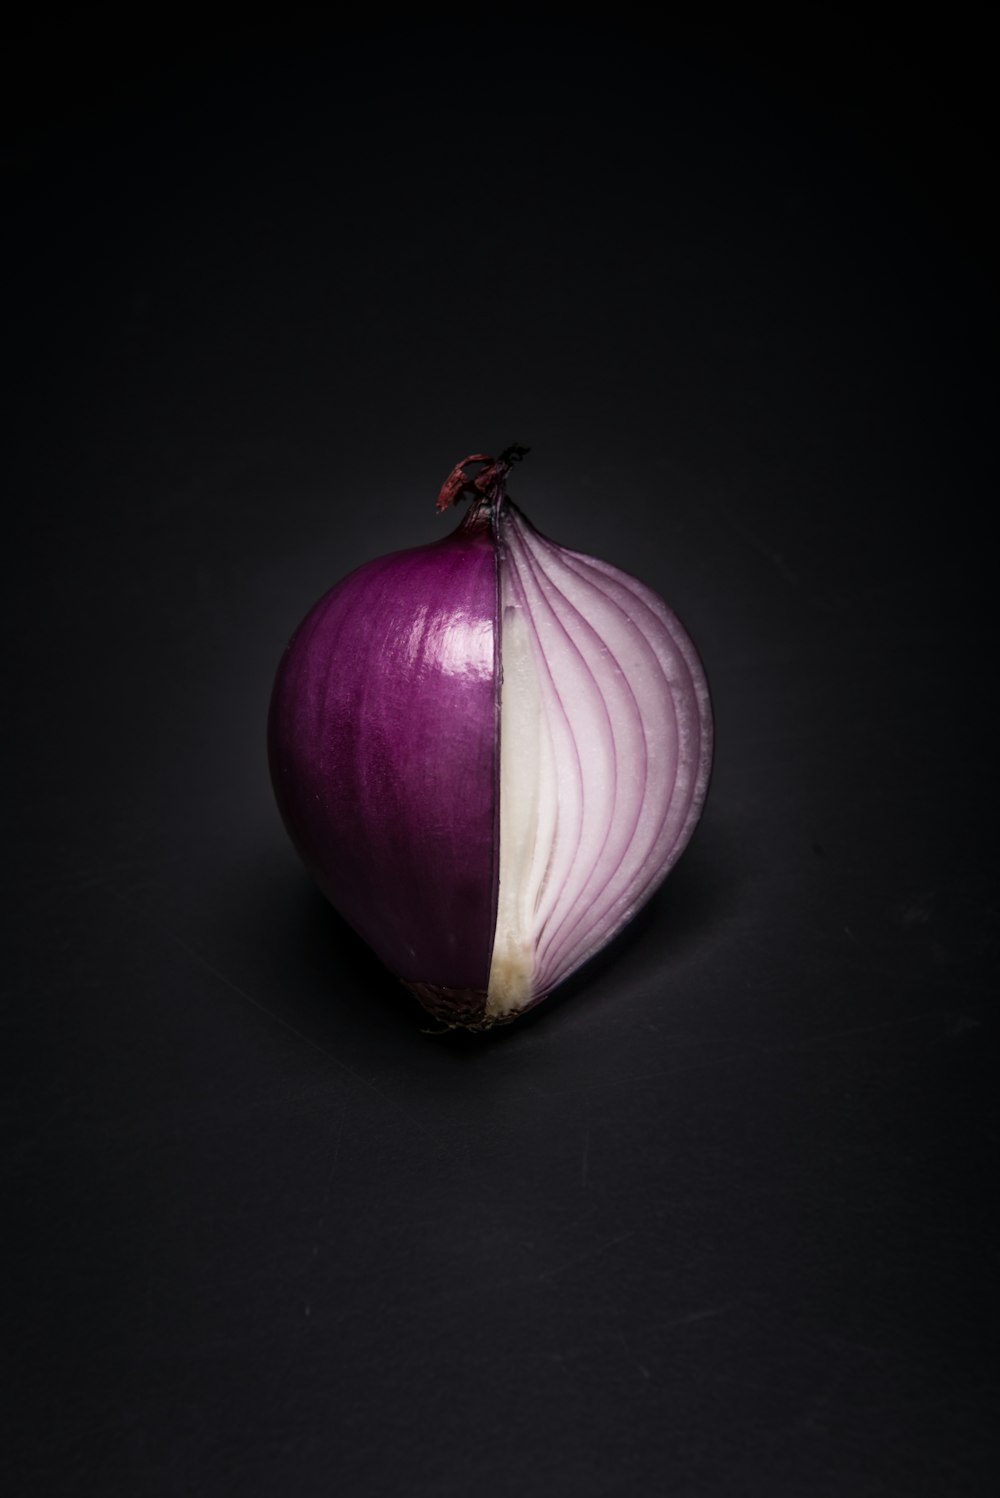 a purple onion with a white stripe on it